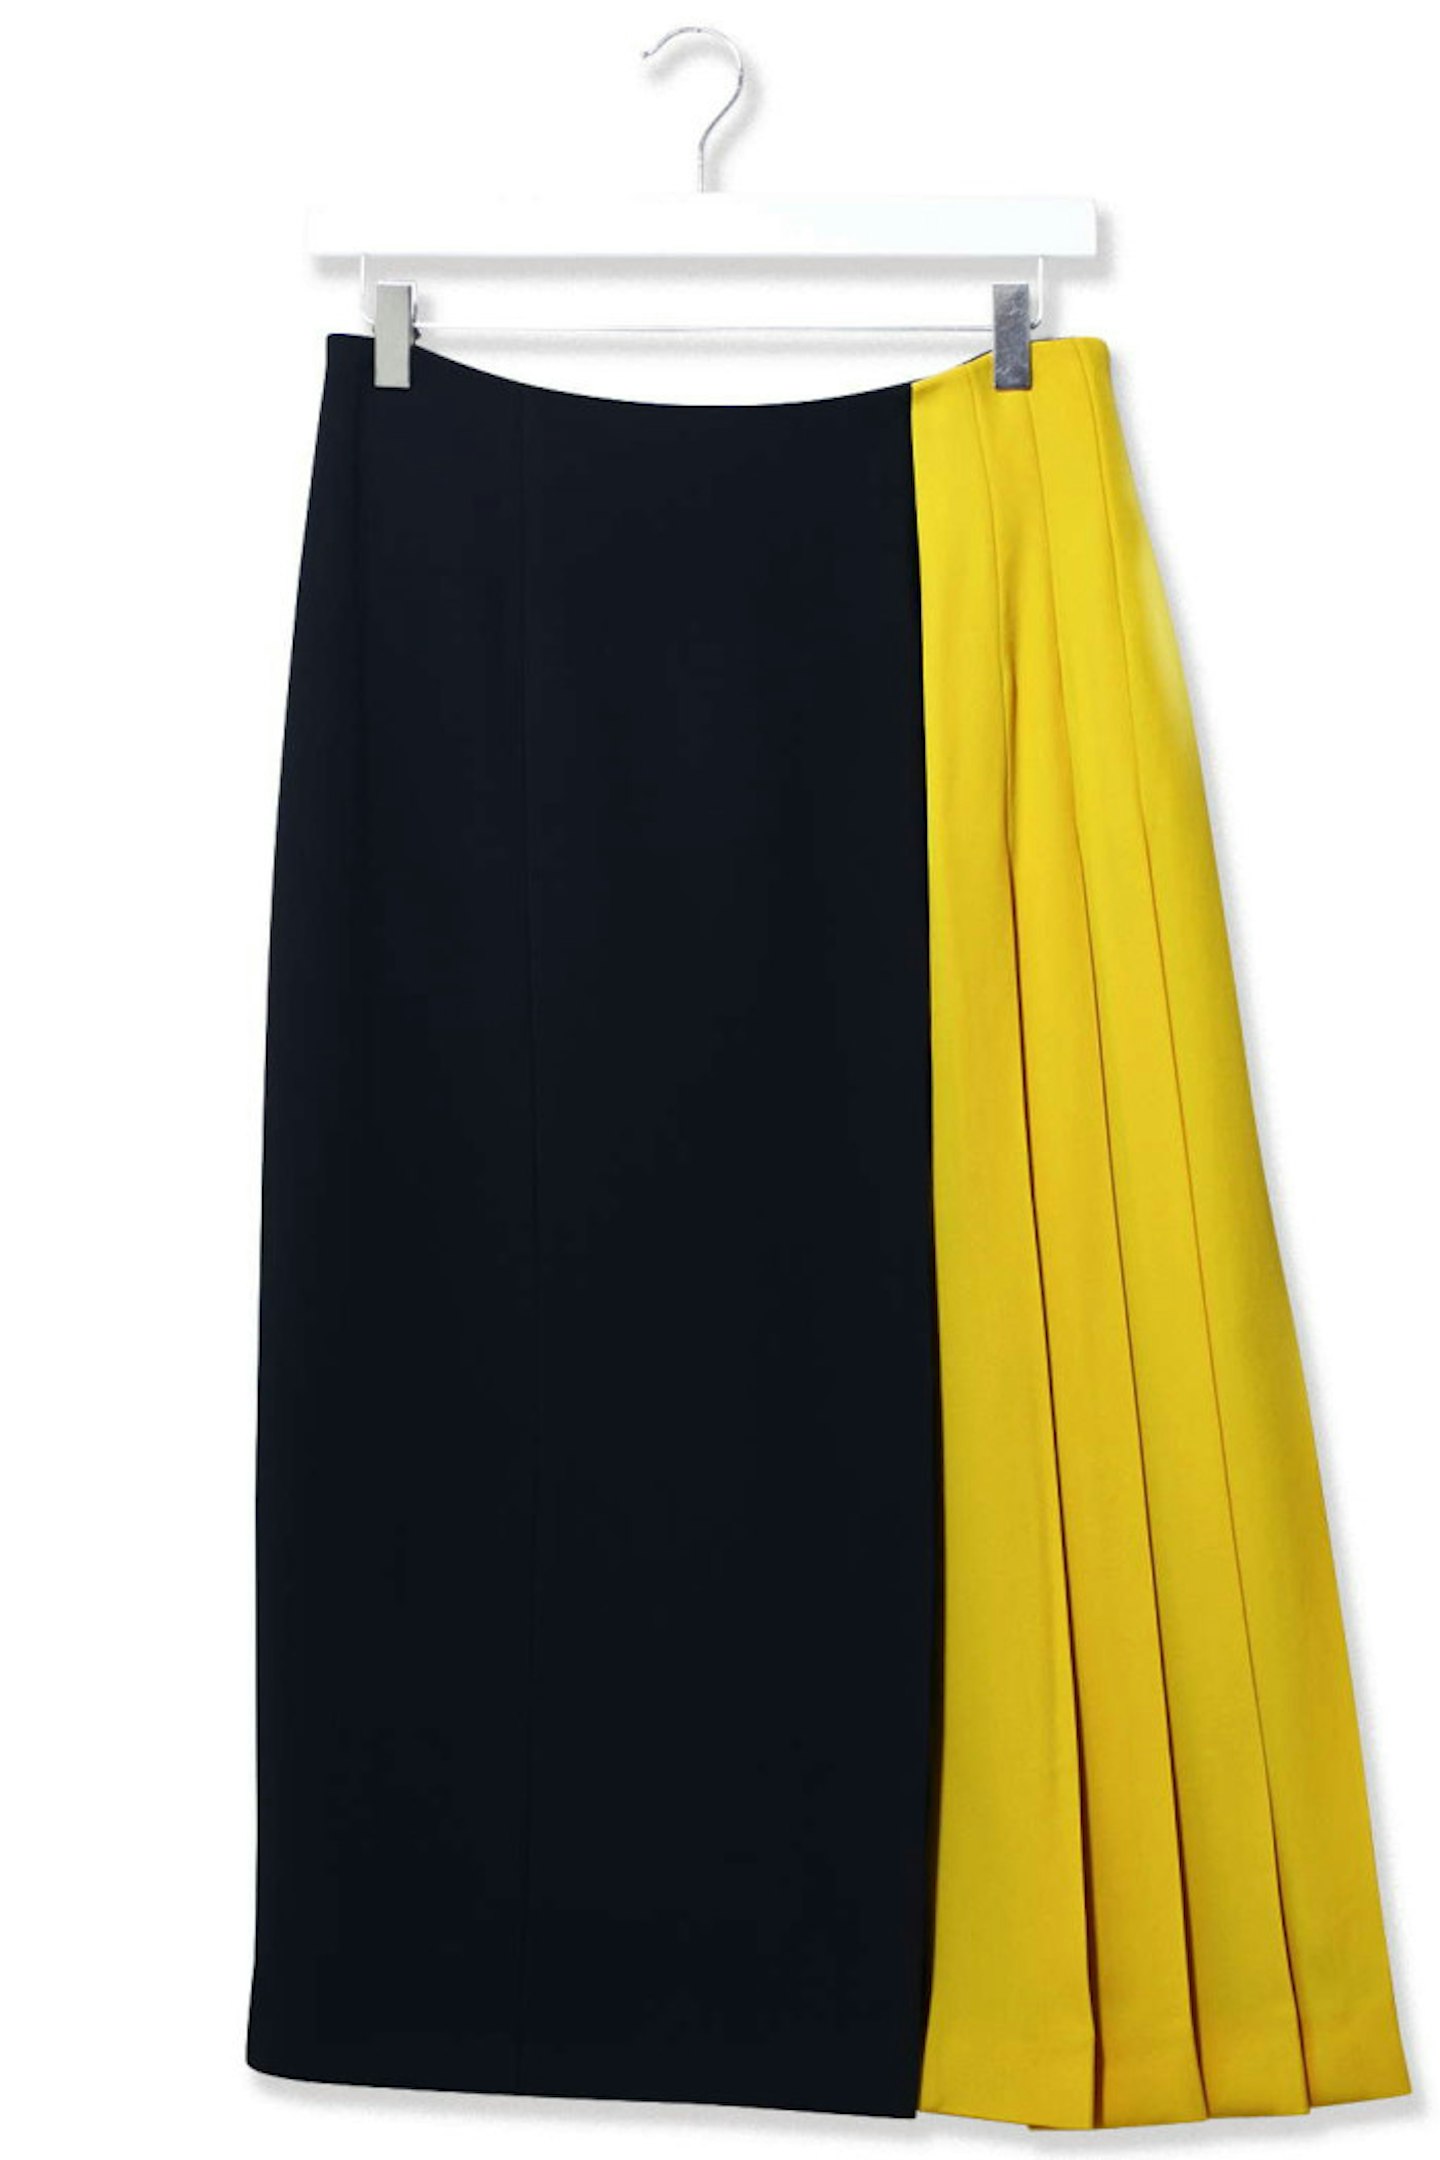 Topshop Boutique Wool Midi Skirt, £95.00